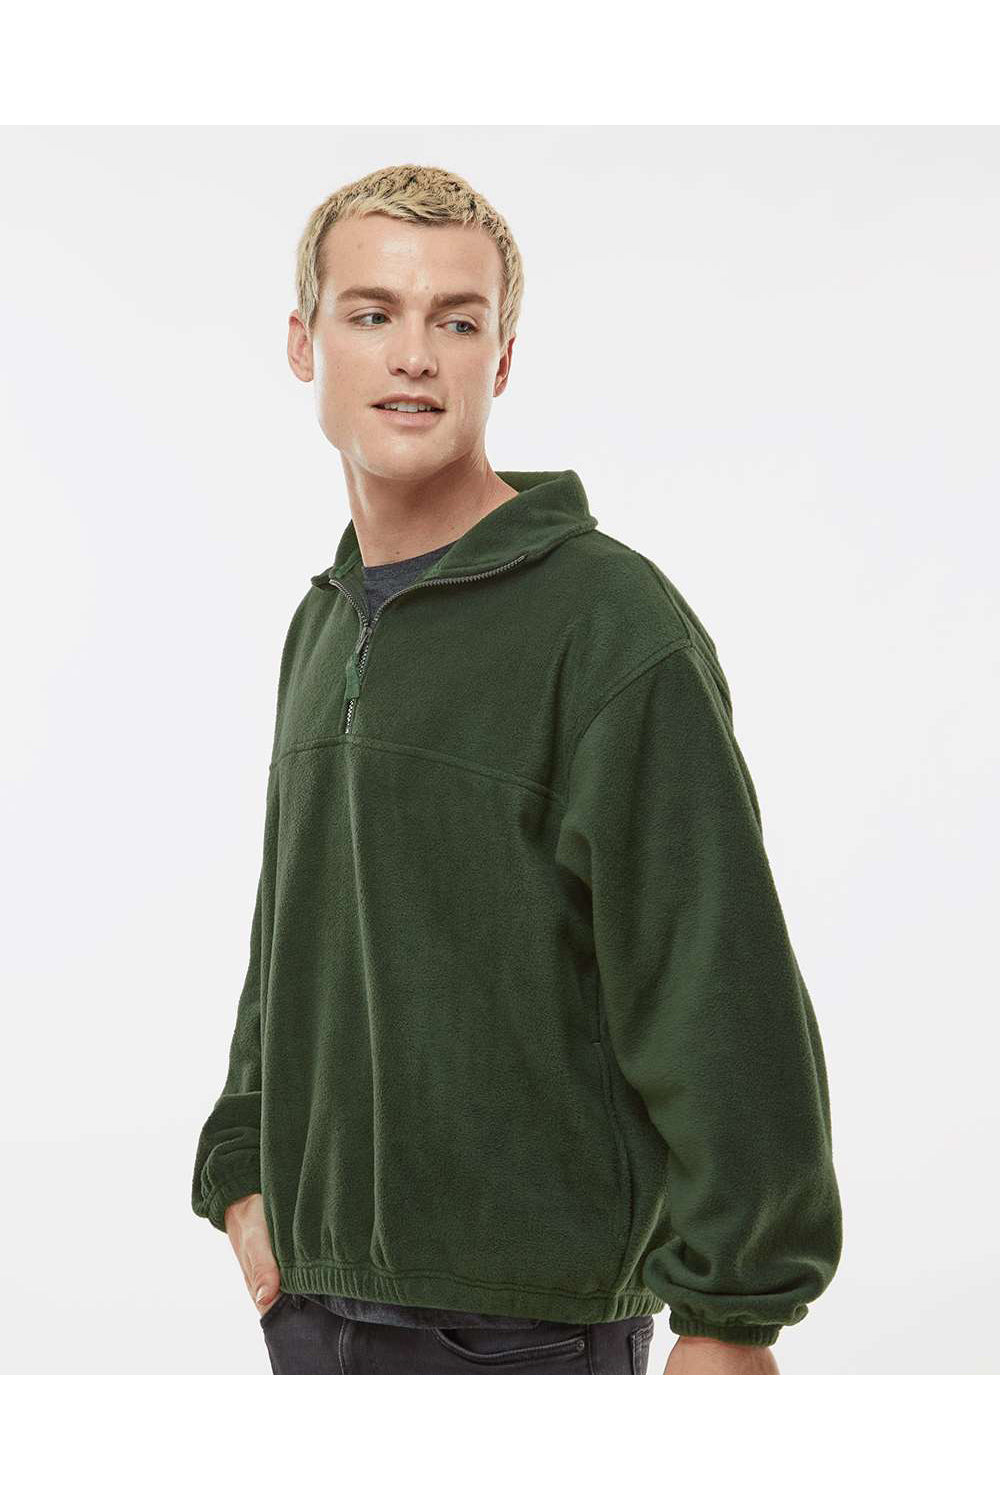 Burnside 3052 Mens Polar Fleece 1/4 Zip Sweatshirt Army Green Model Side